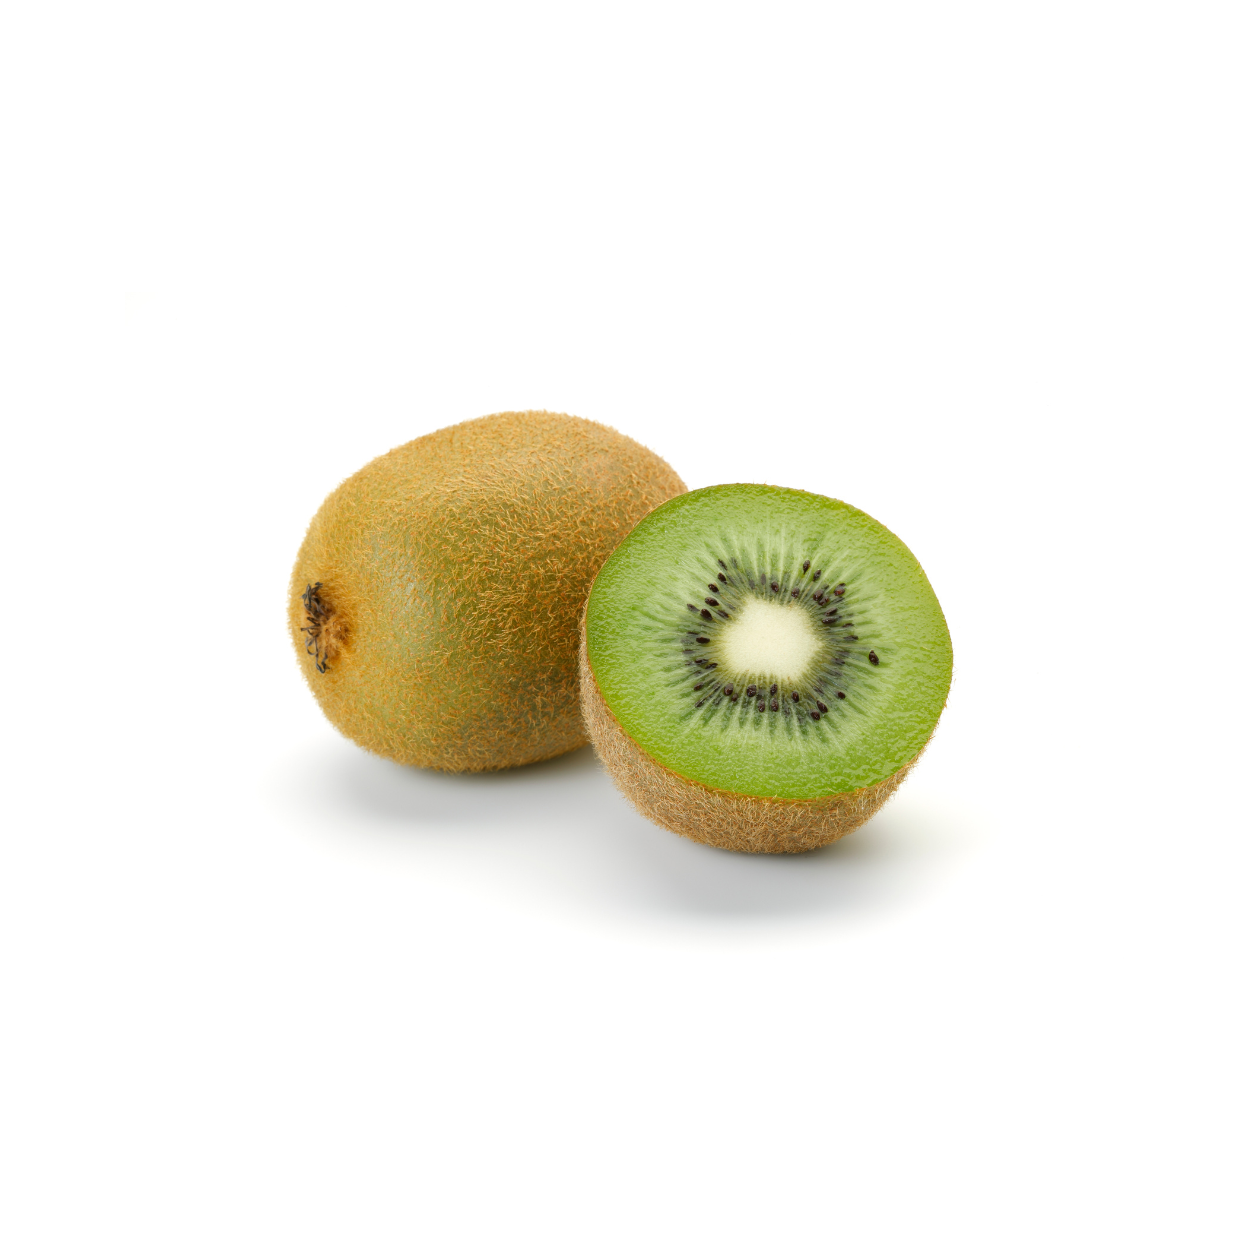 Kiwifruit - Green Imported - * 4 for $3.50 *